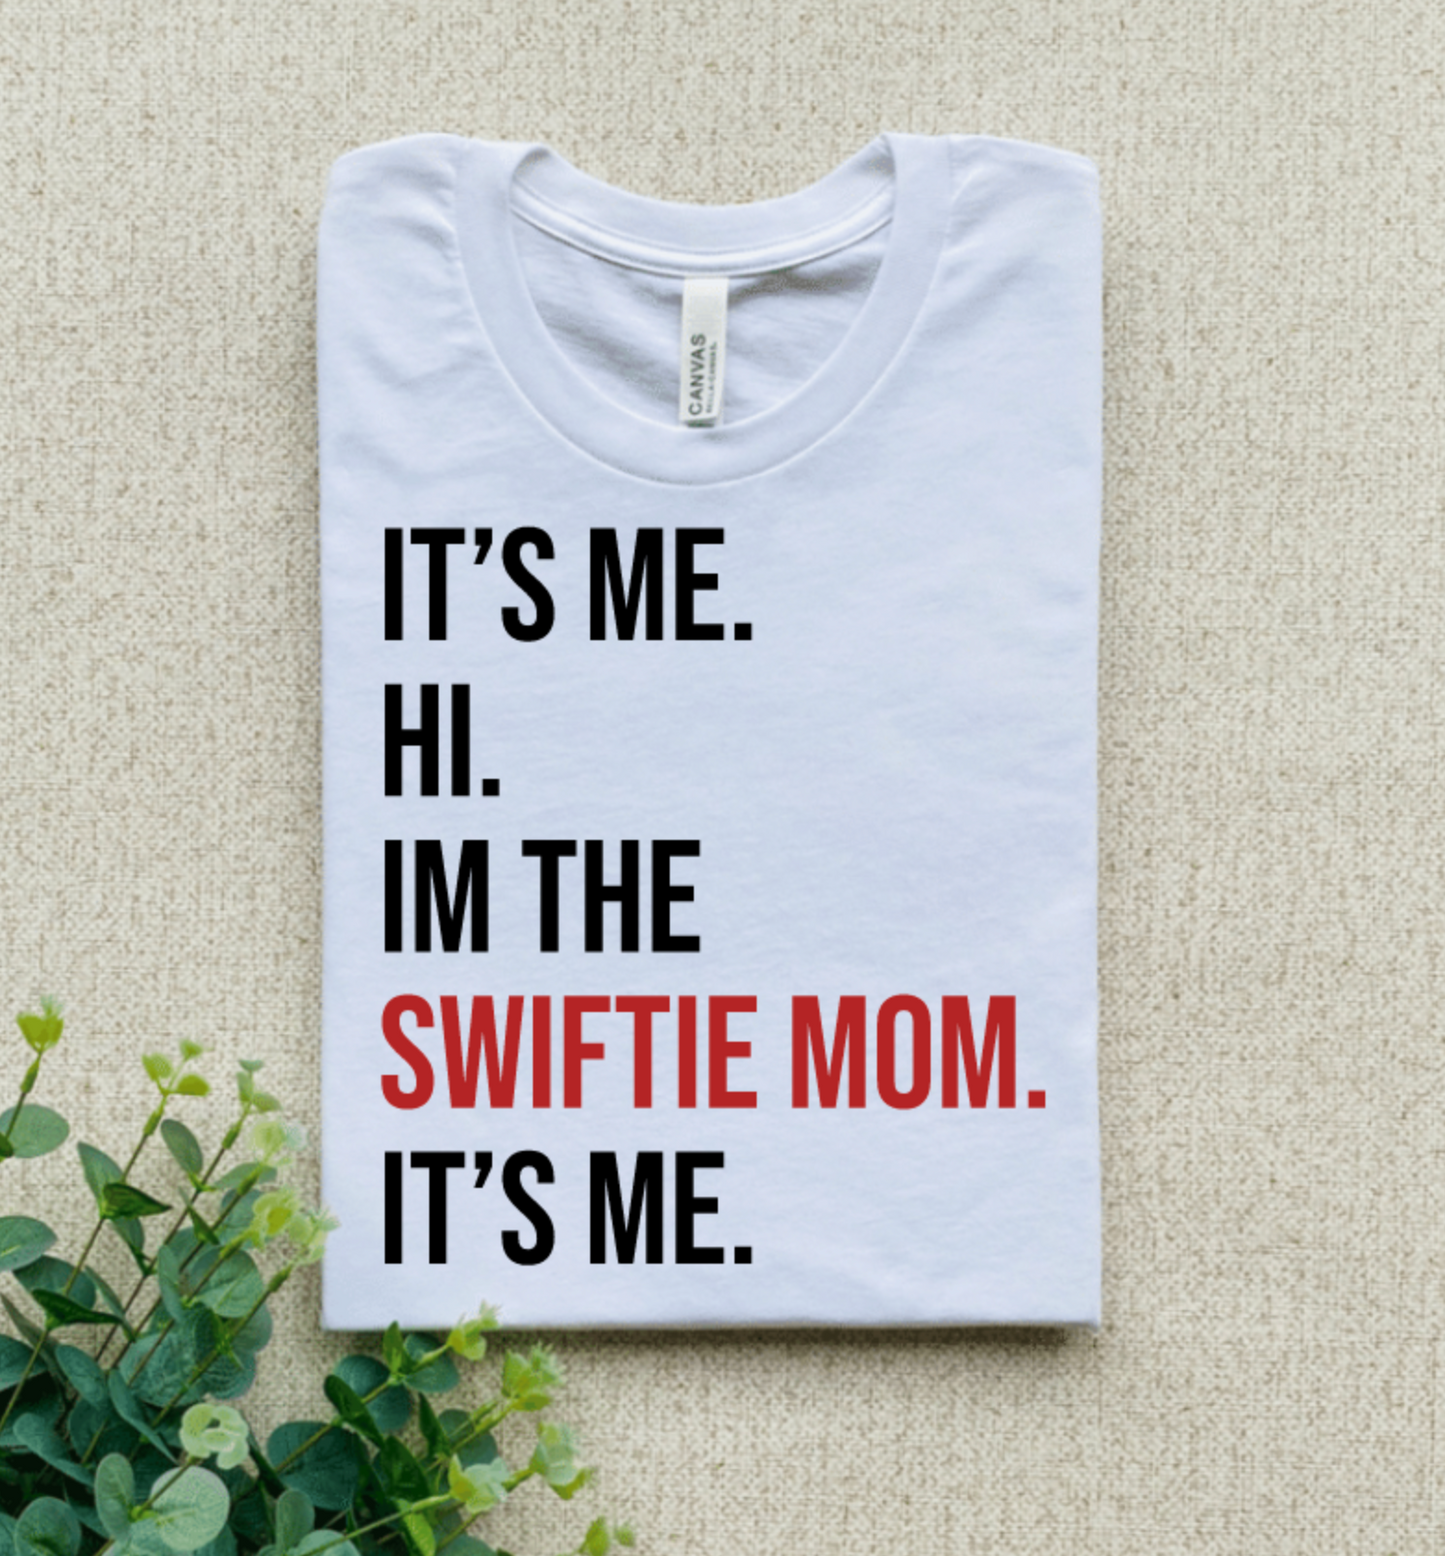 IT'S ME HI IM THE SWIFTIE MOM IT'S ME